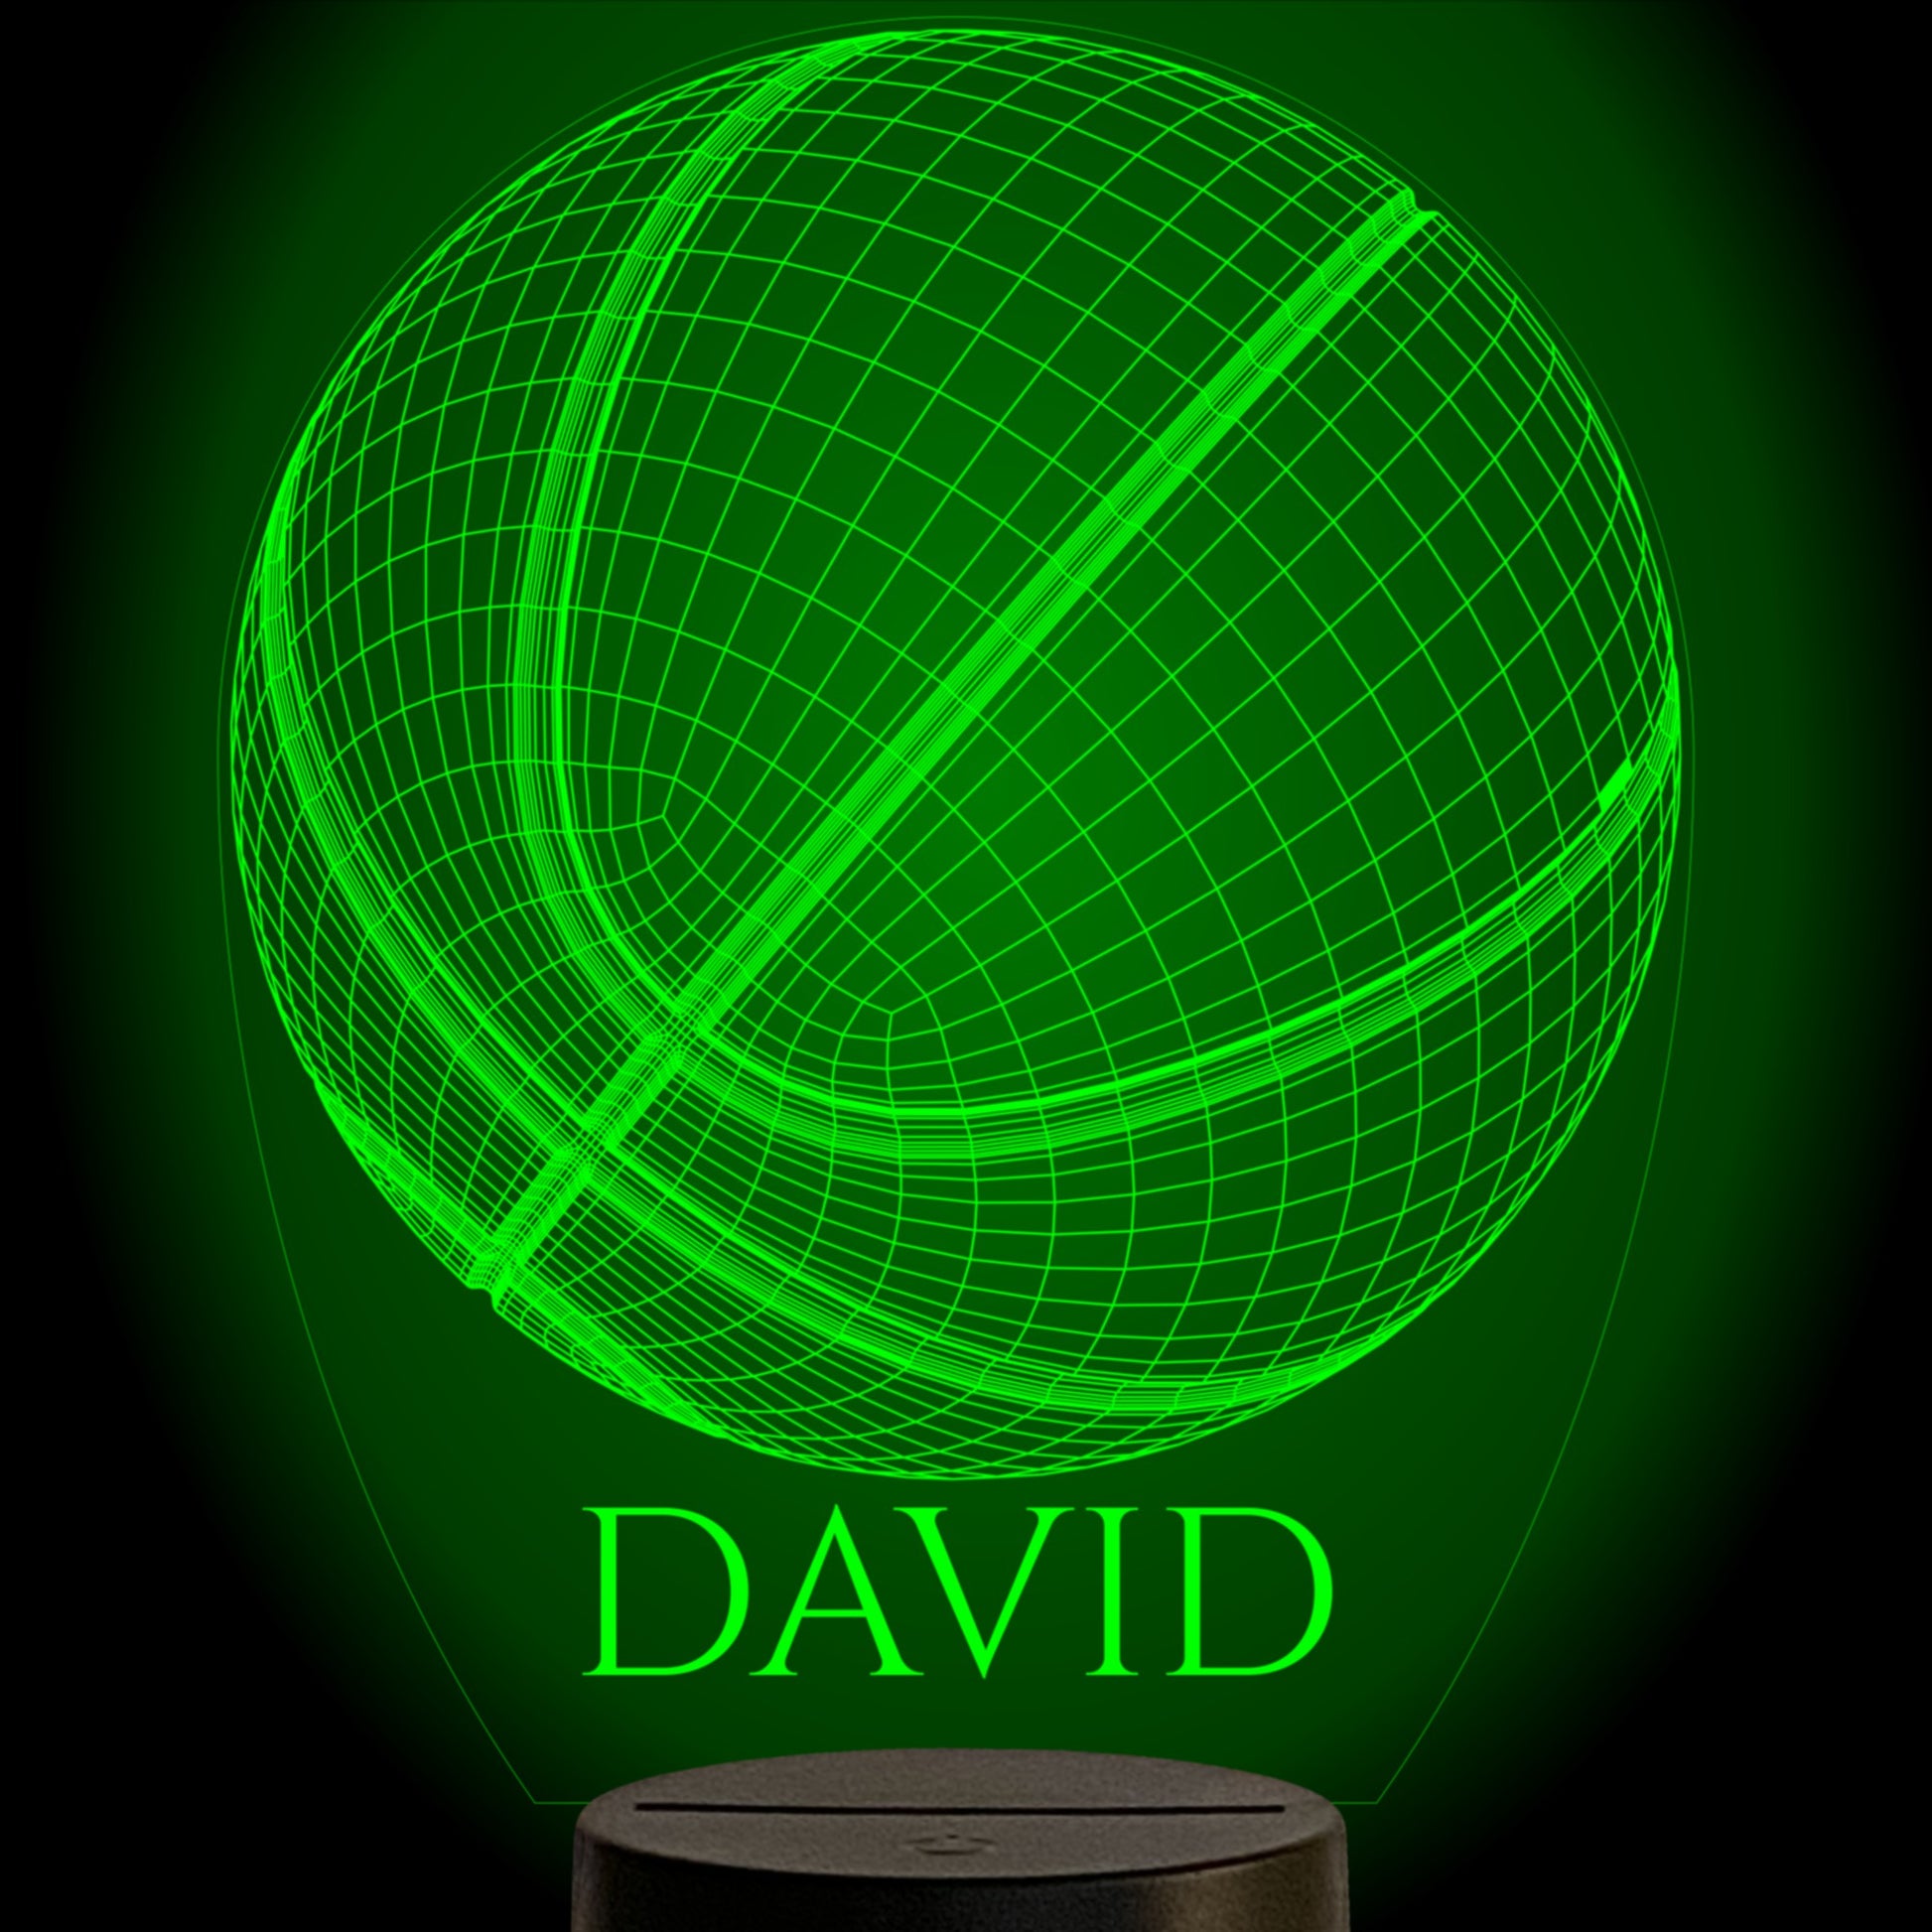 personalizedd illusion basketball night light. Shown in green.